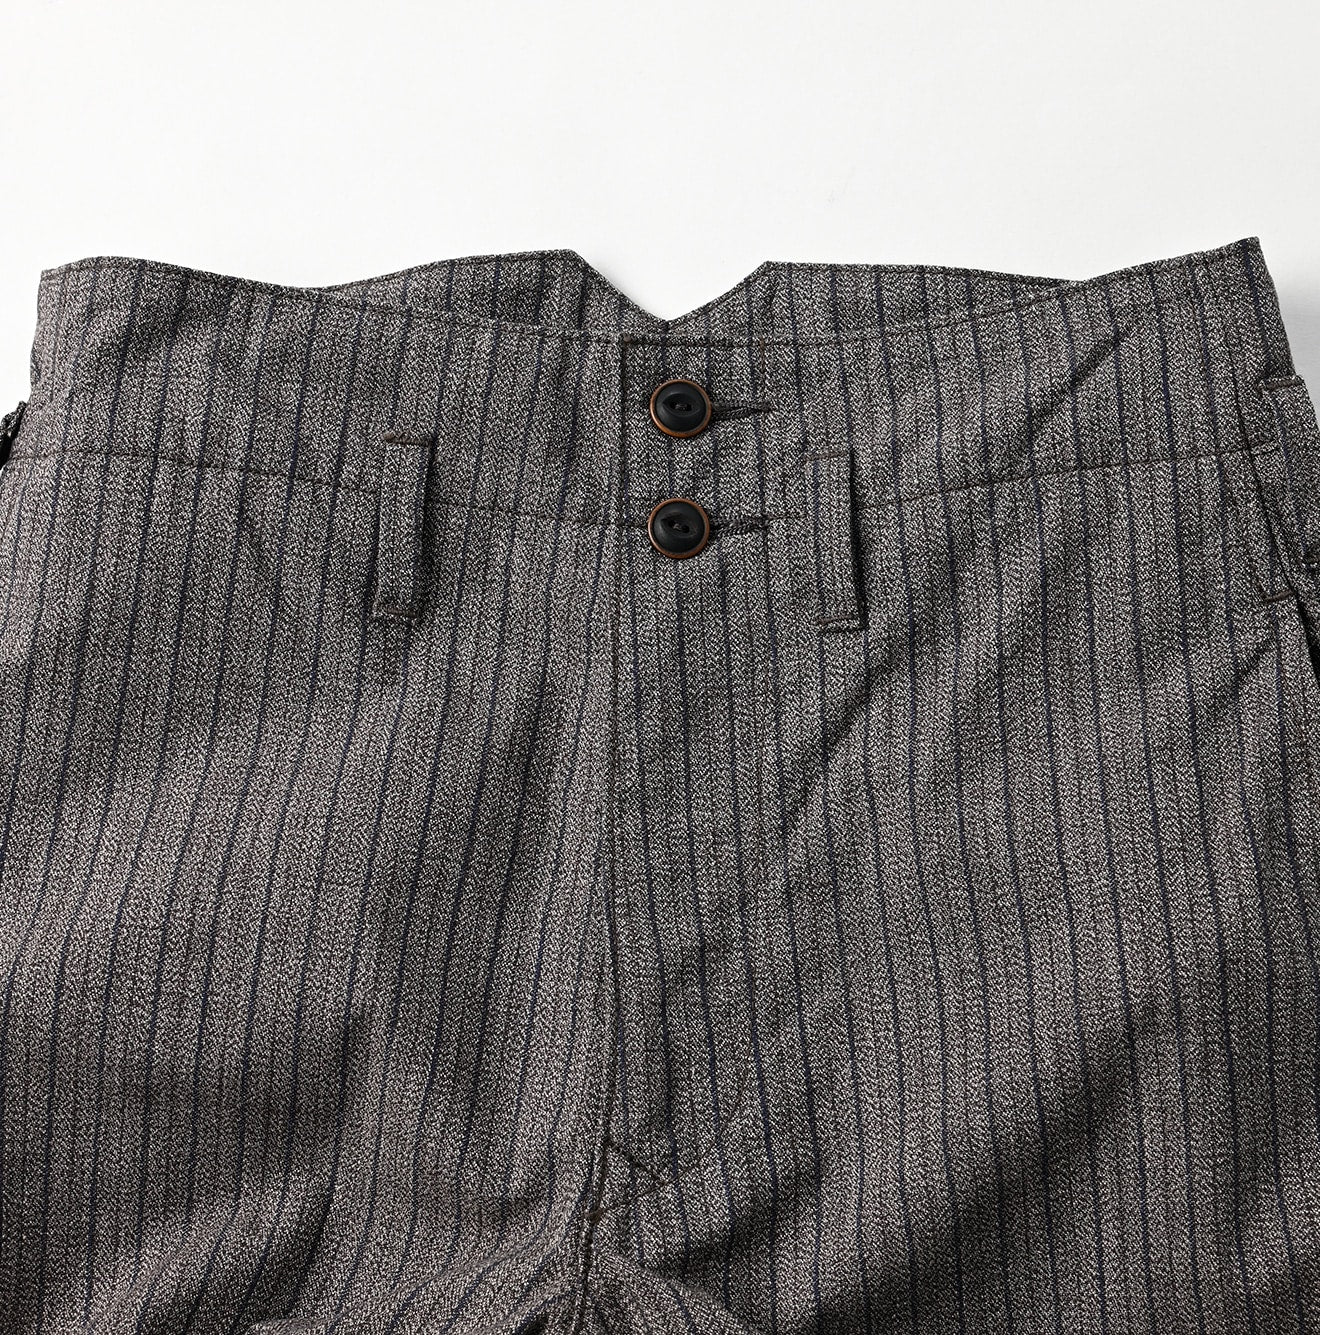 45R Yorimoku Cotton Tweed 908 Jodhpurs Pants